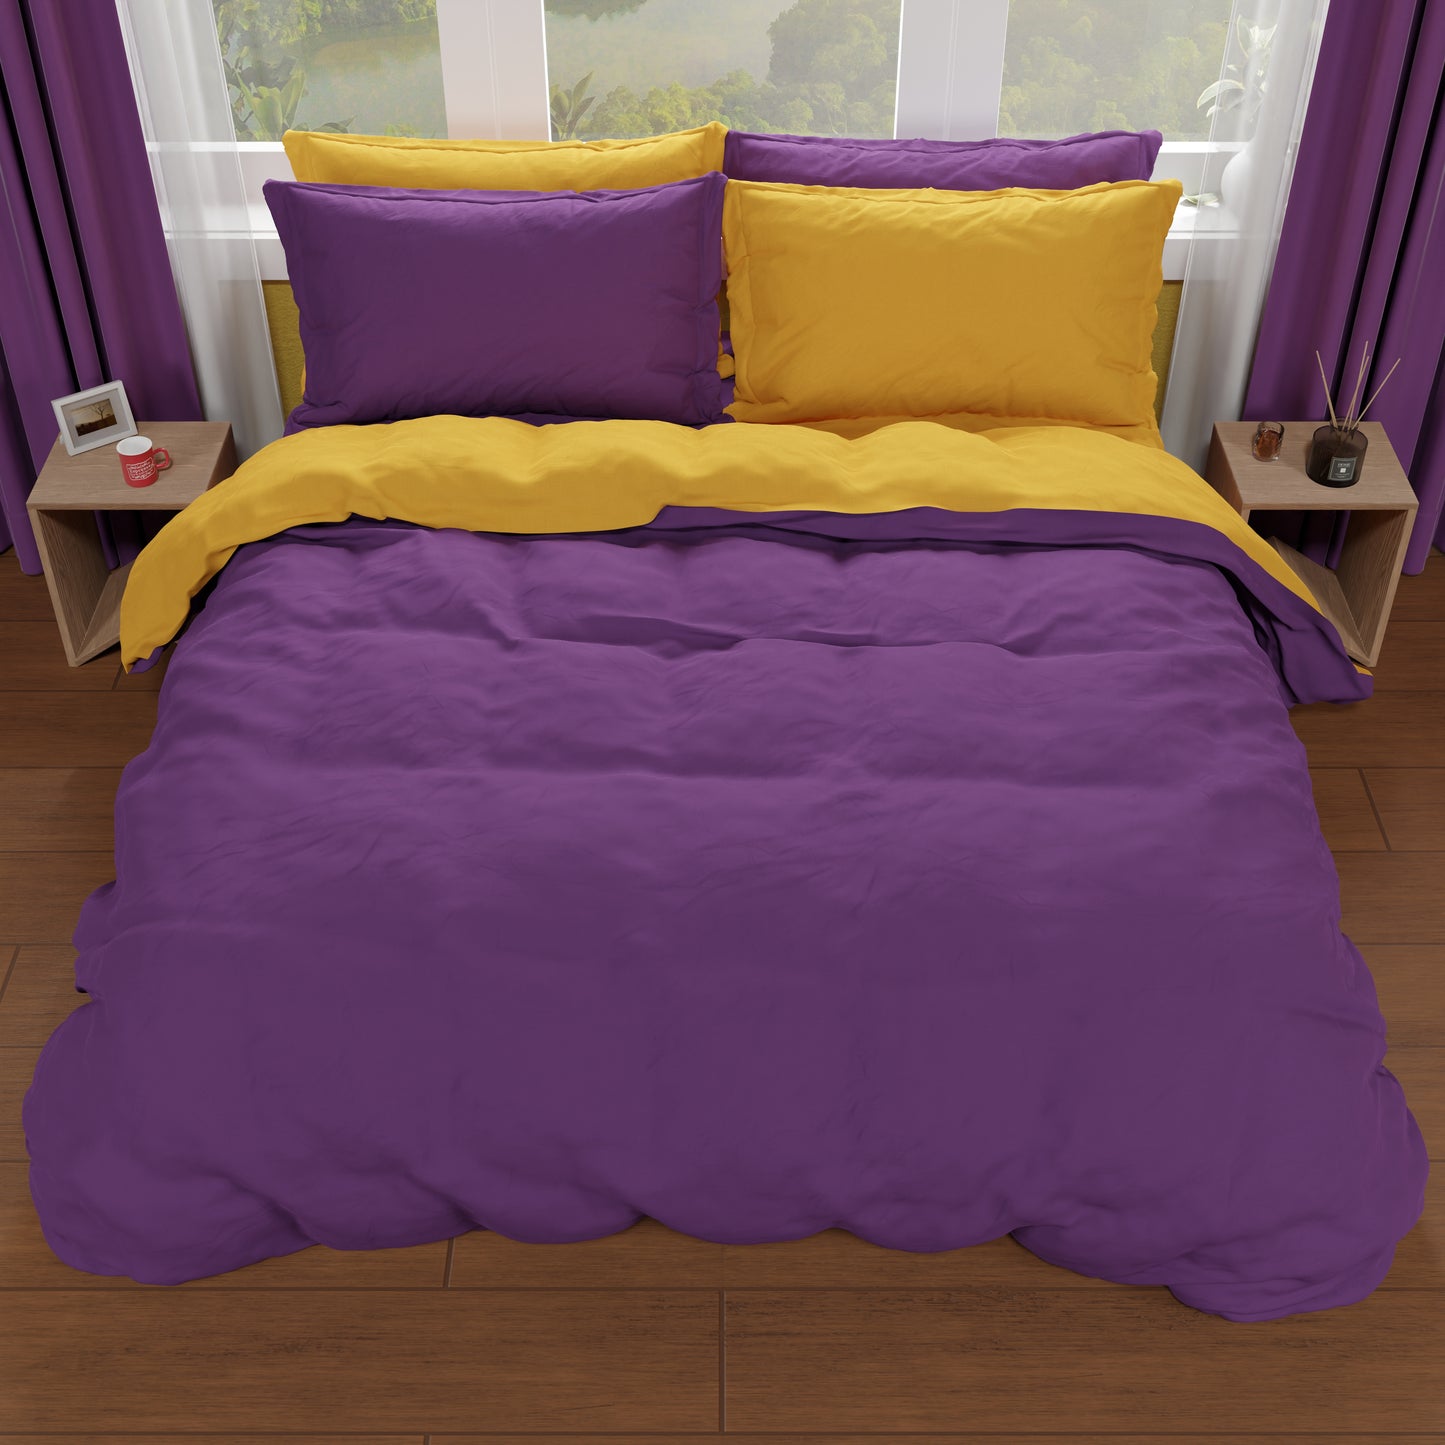 Double Duvet Cover, Duvet Cover and Pillowcases, Purple/Ochre Yellow